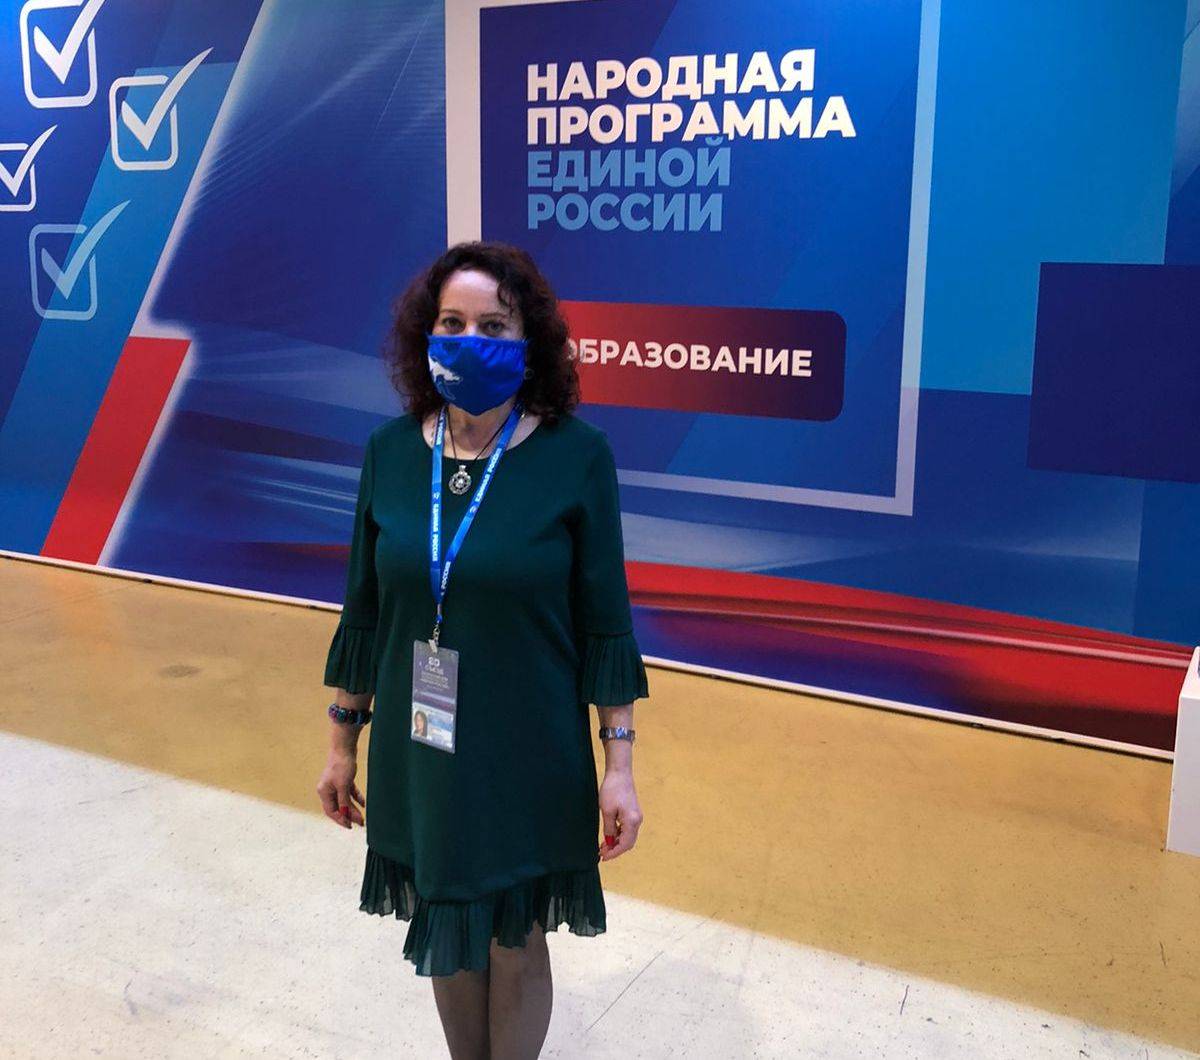 Анна Андреенкова: «Во время Съезда президент озвучил инициативы по повышению уровня жизни россиян»